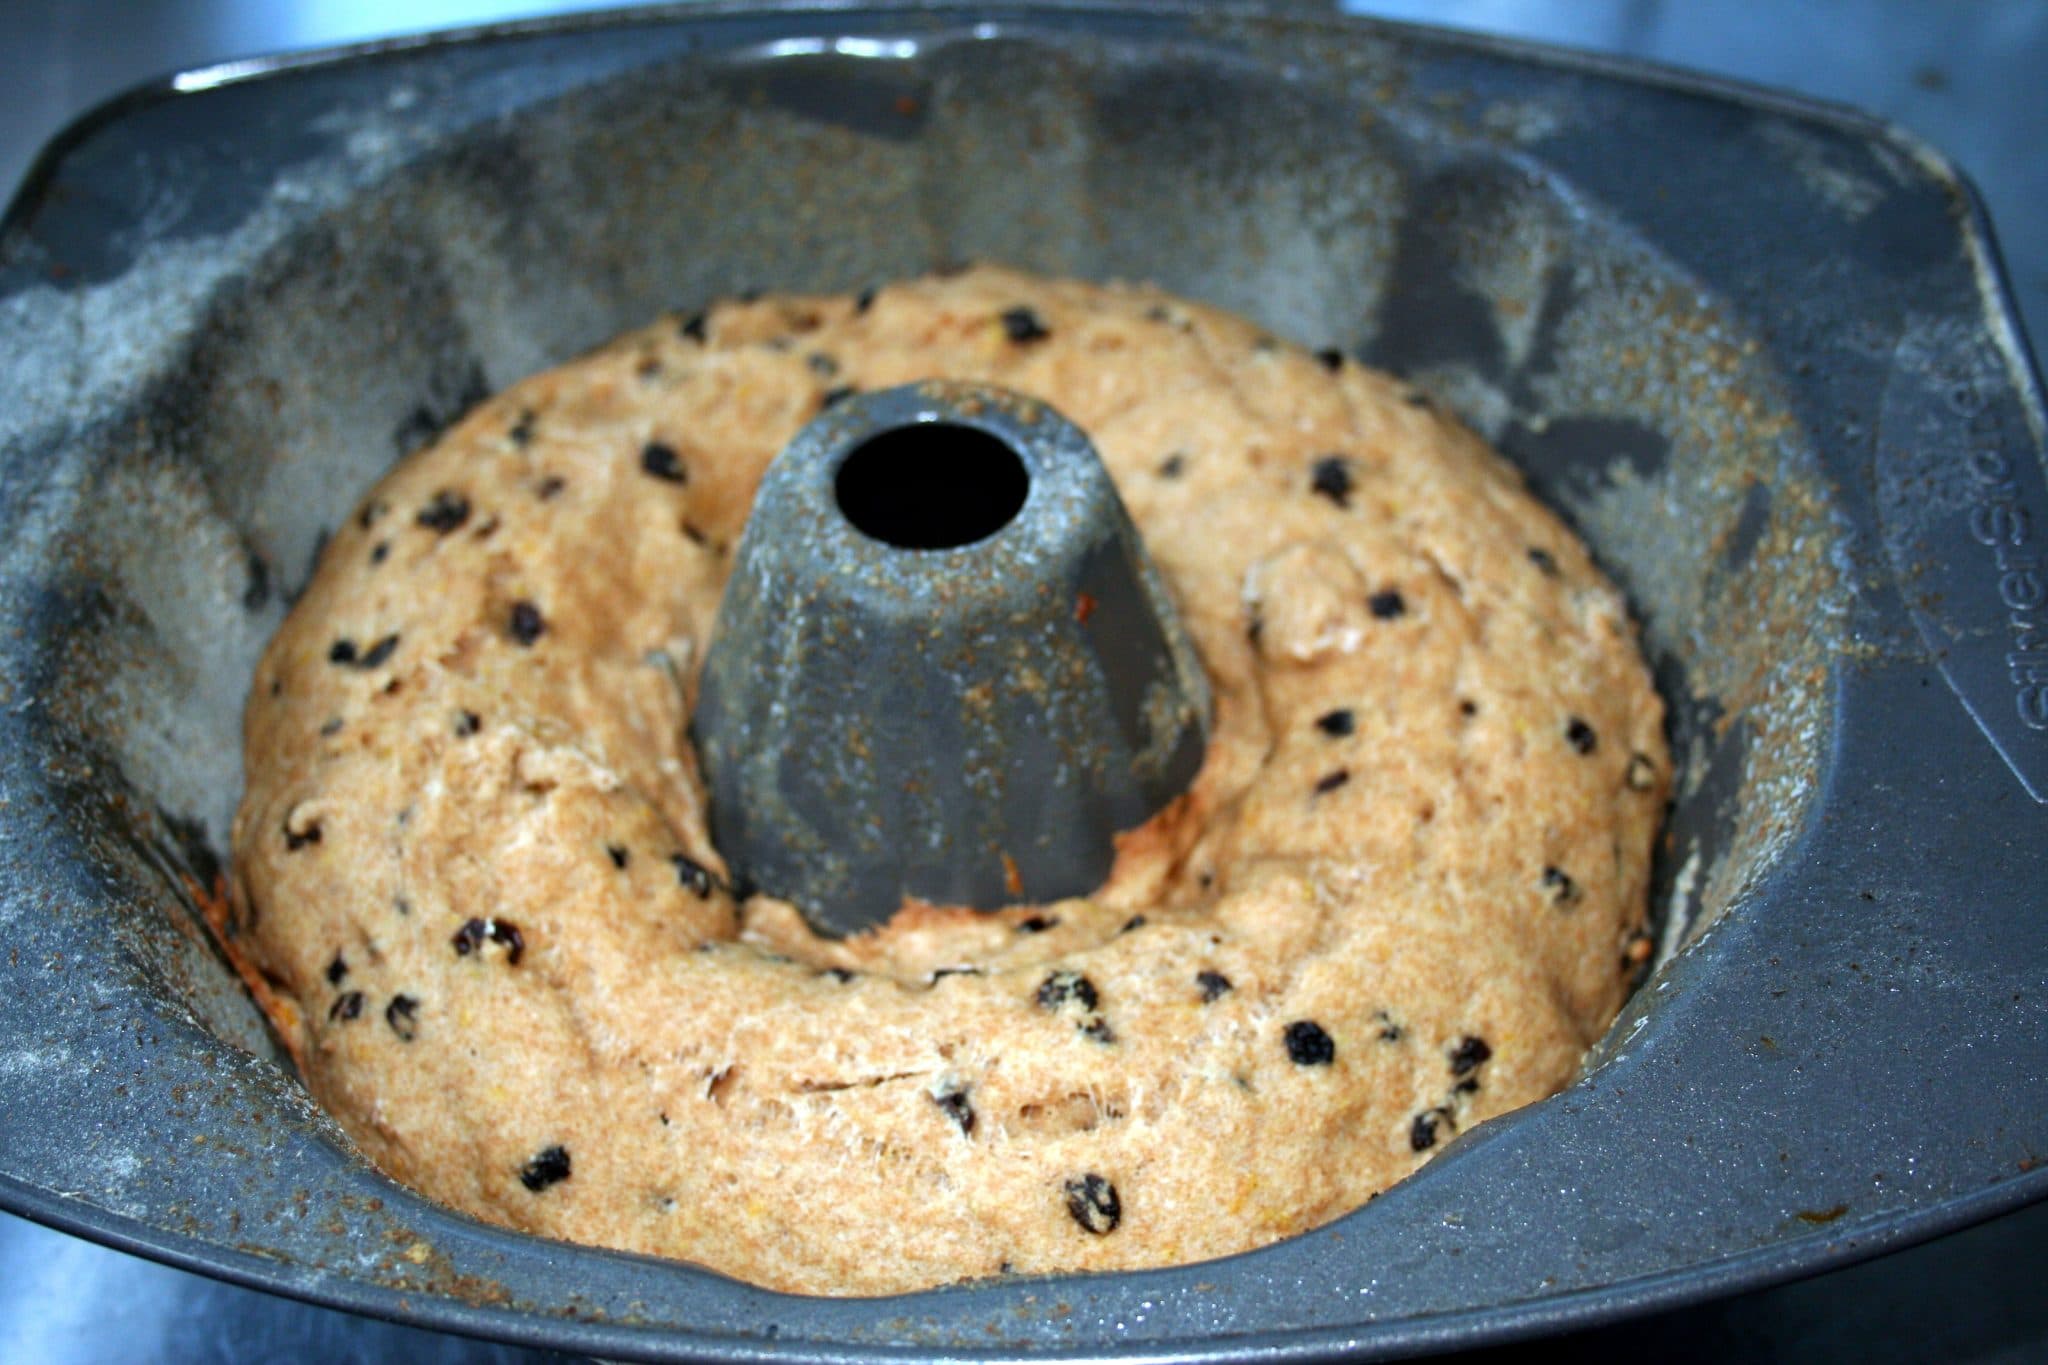 Raw Vegan Orange-Currant Brunch Cake in bundt pan to be cooked